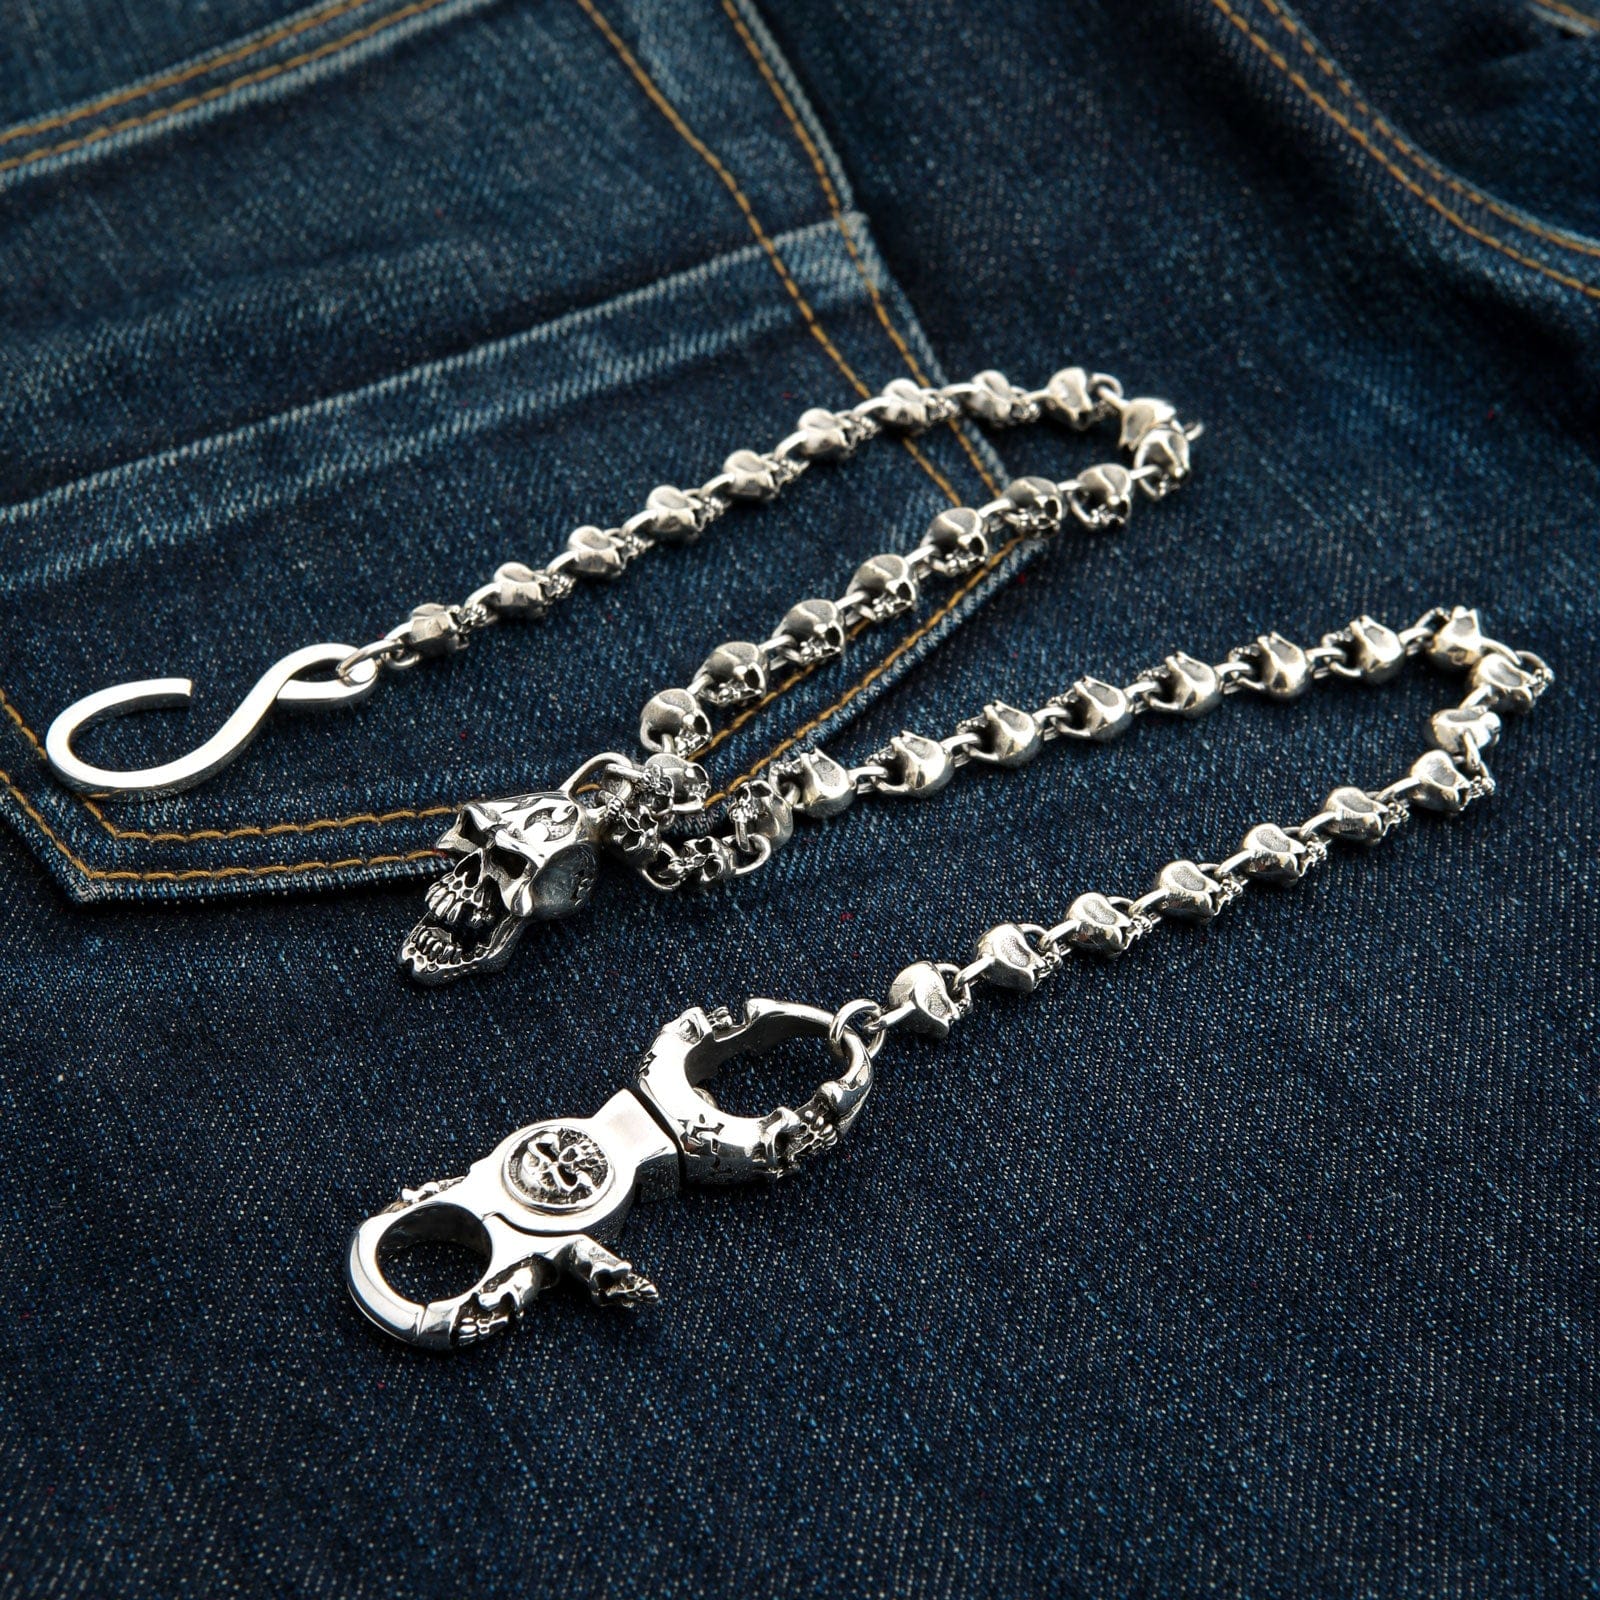 Double Wallet Chain Motorcycle Chain Biker Gift Chain 